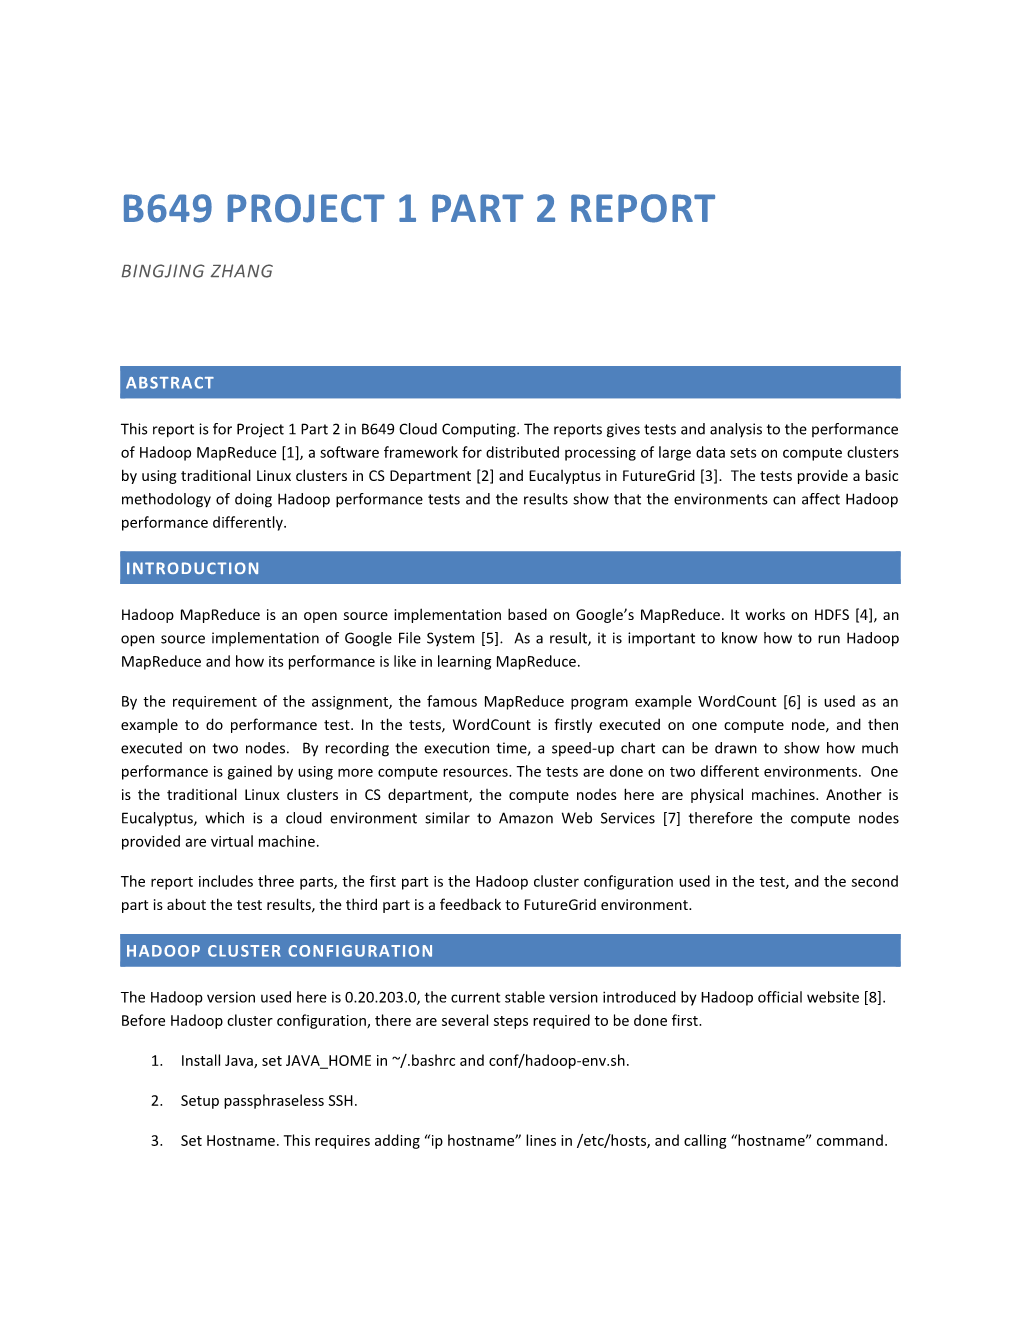 B649 Project 1 Part 2 Report